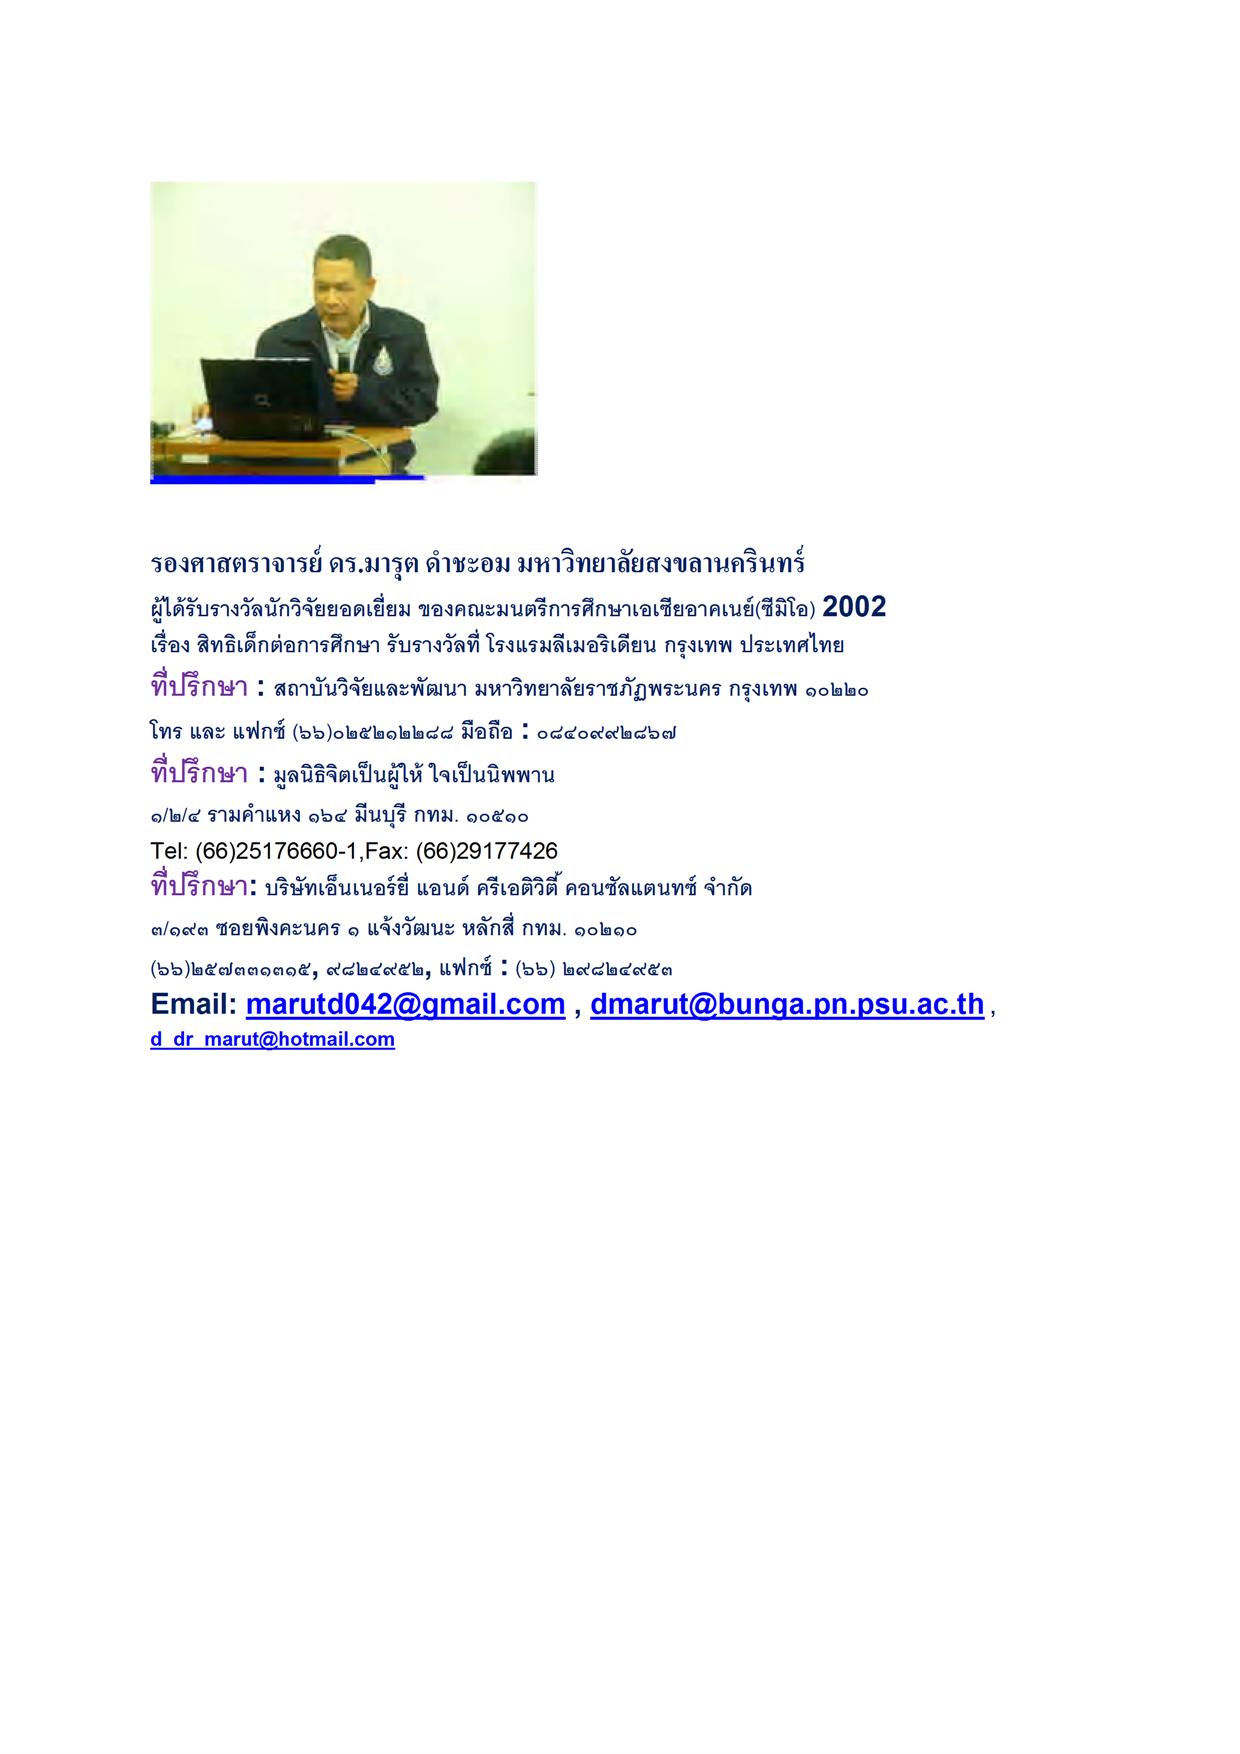 Phra Dr Marut Damchaom information in Thai text